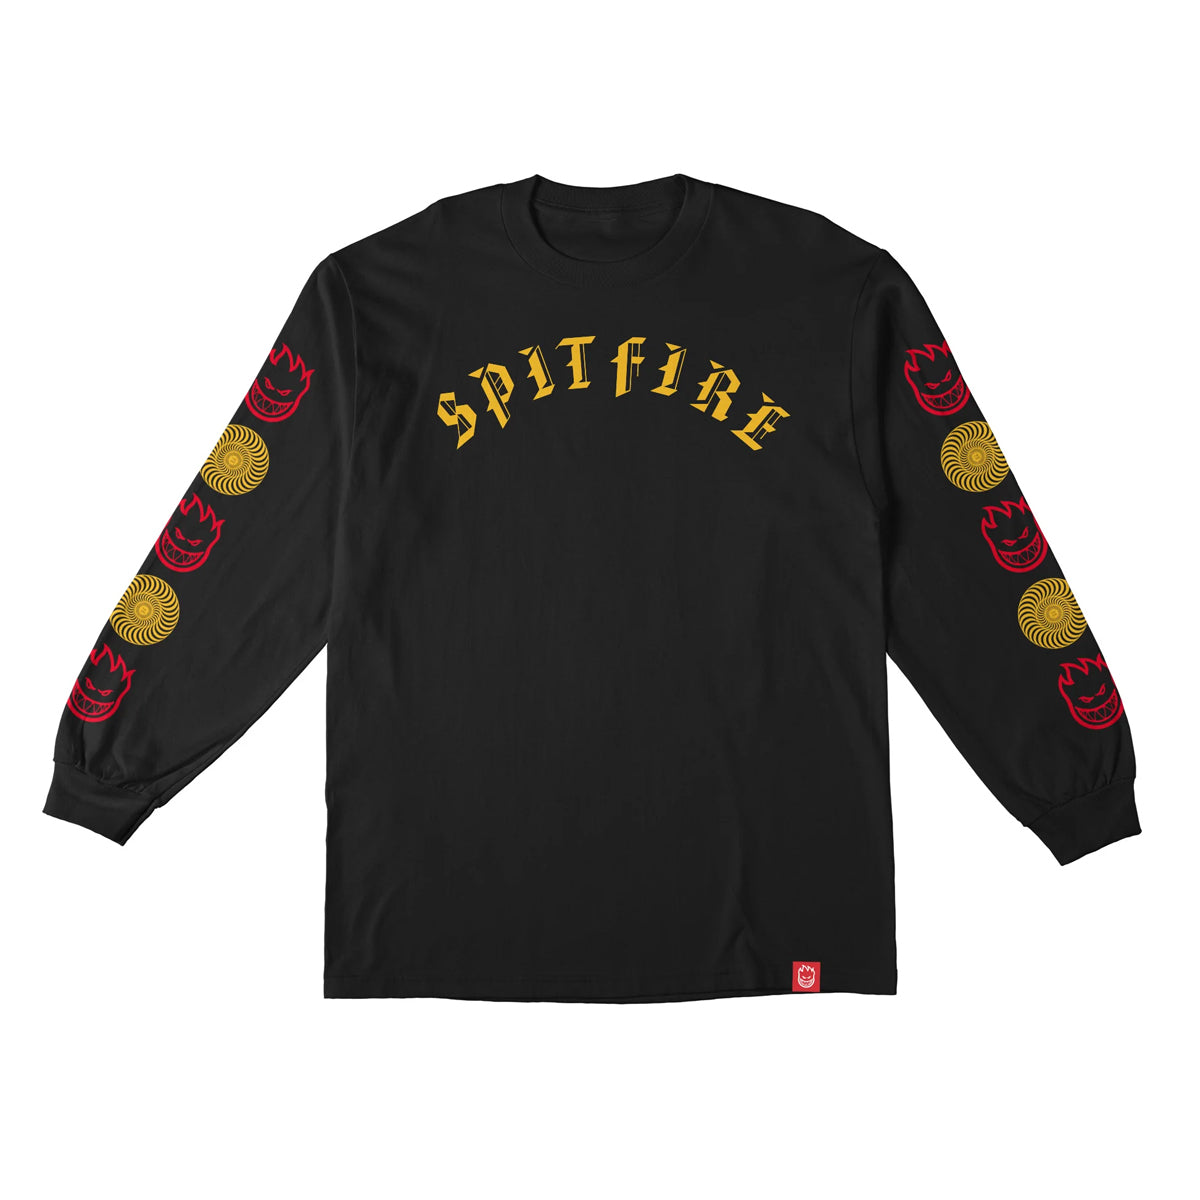 Spitfire Old English Combo Long Sleeve Shirt (Black) - Apple Valley Emporium